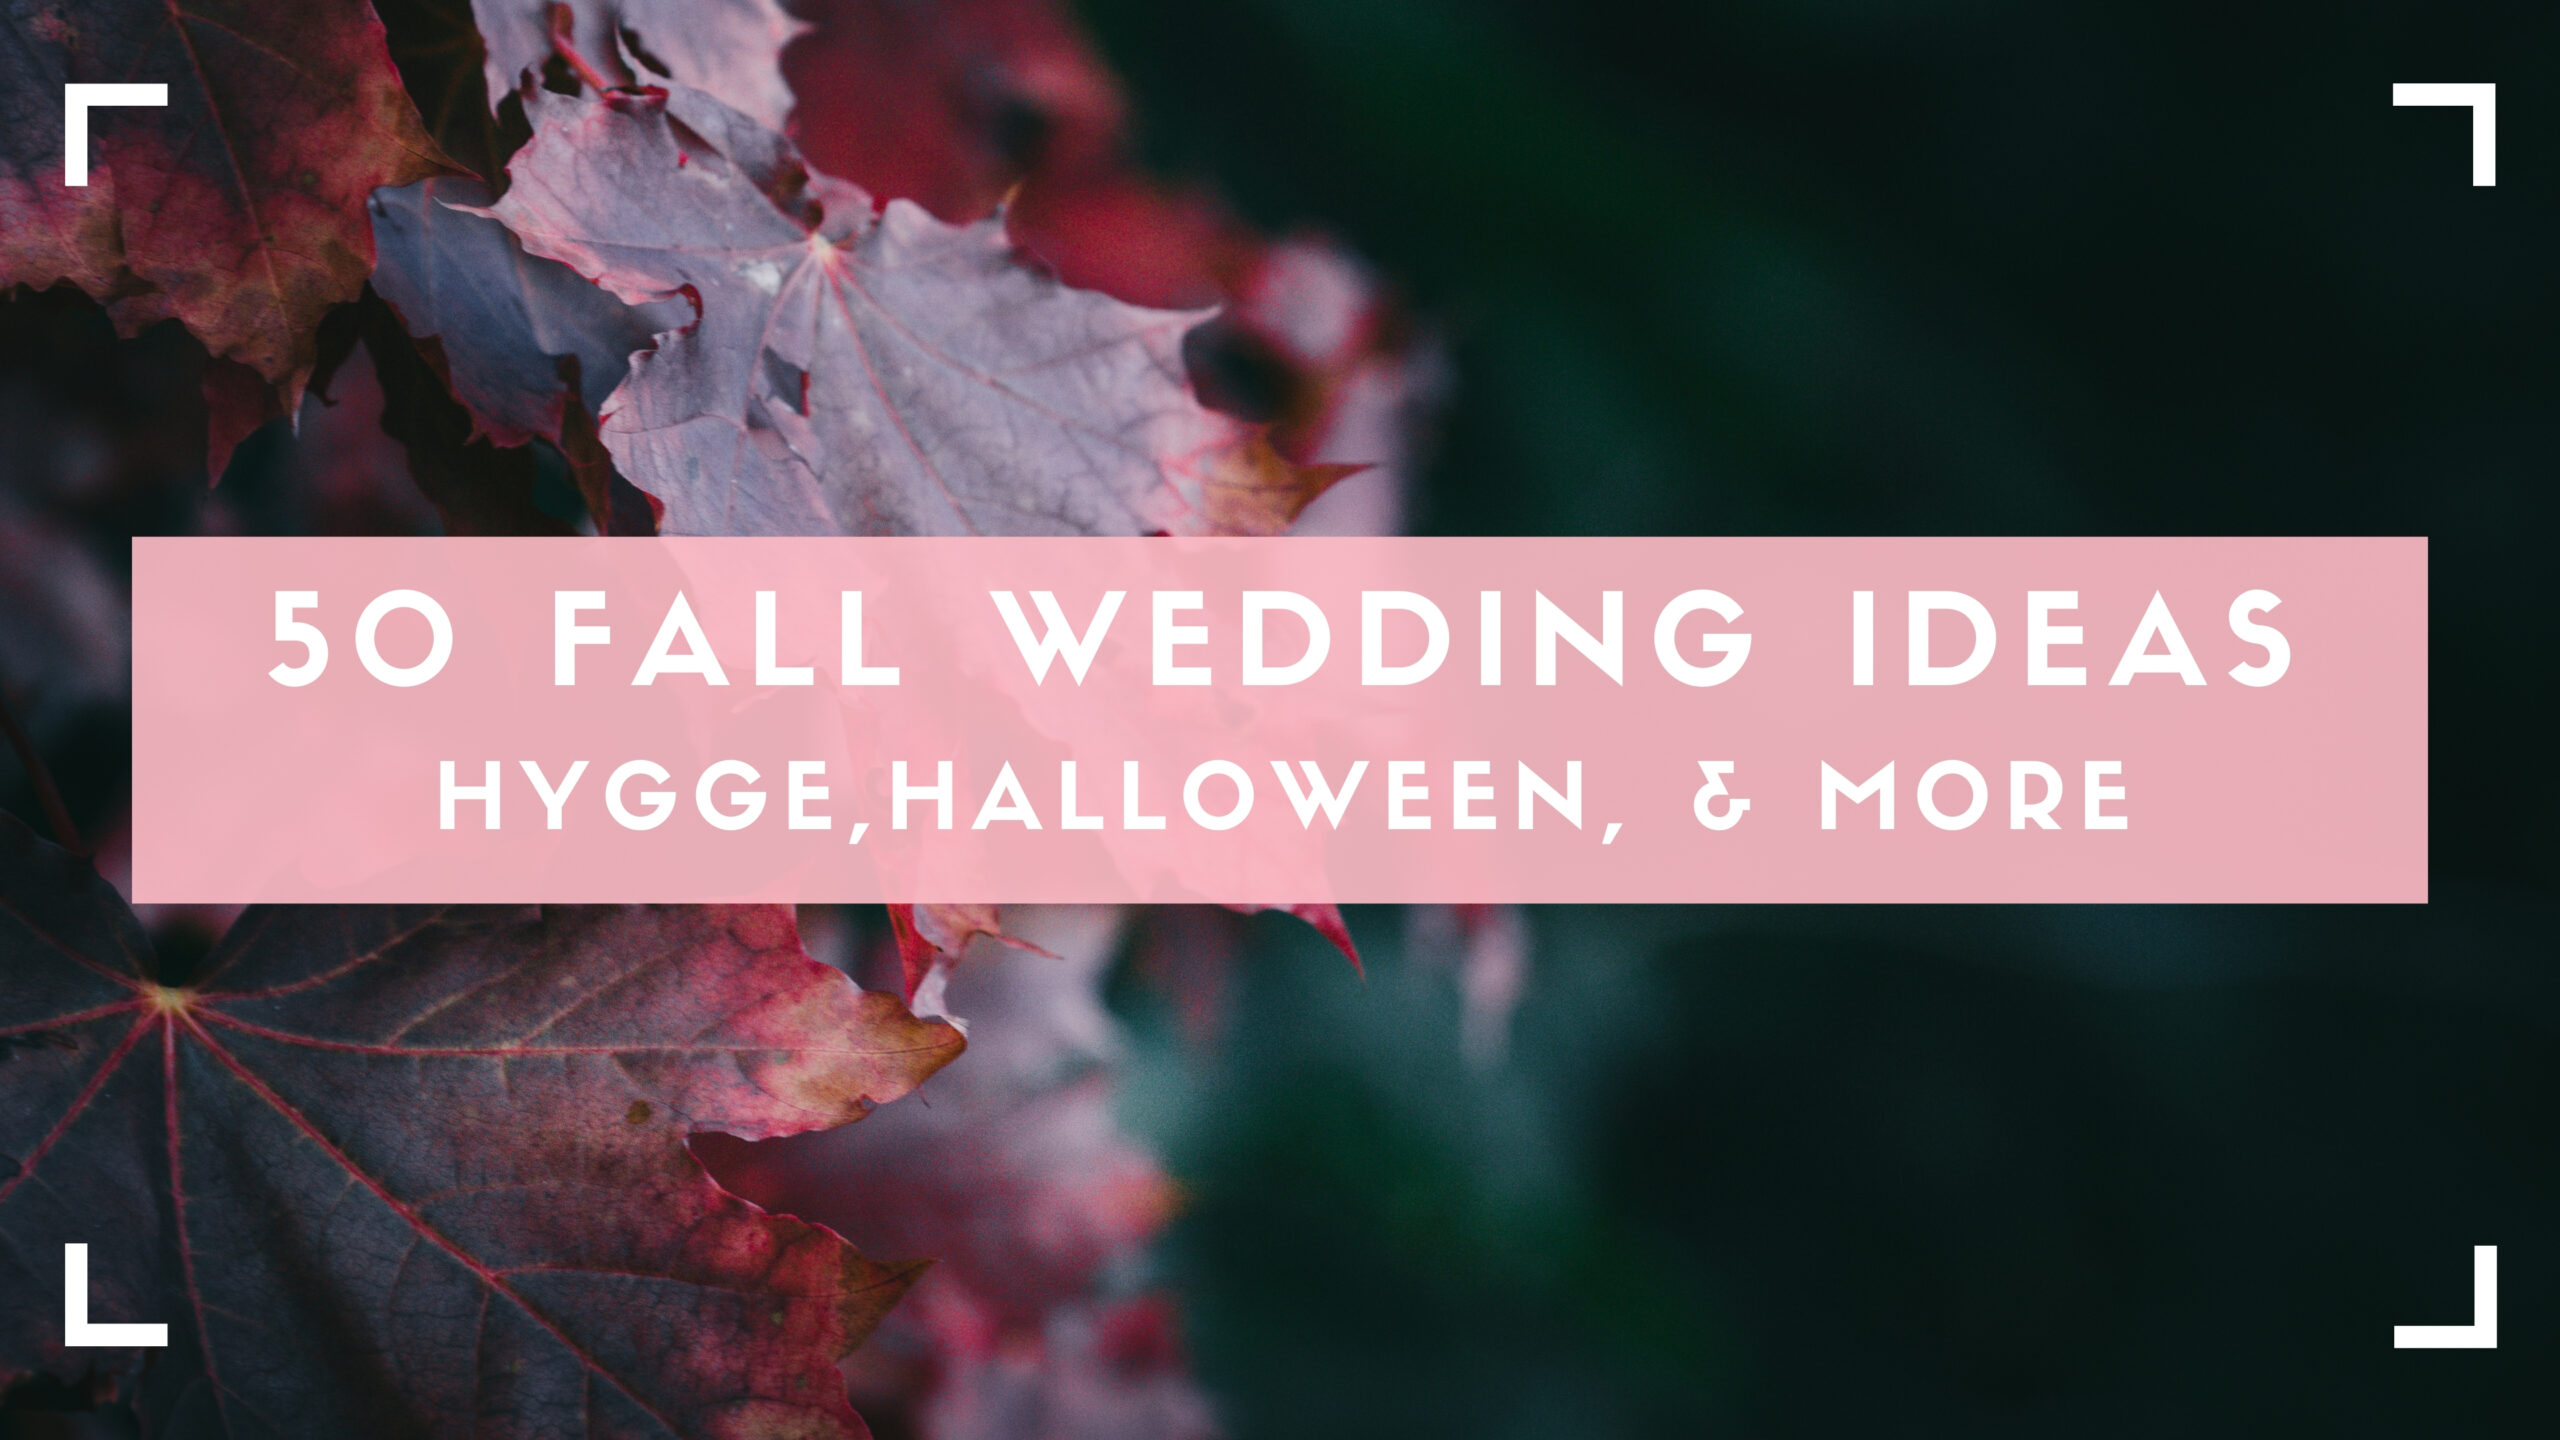 Fall wedding ideas blog header